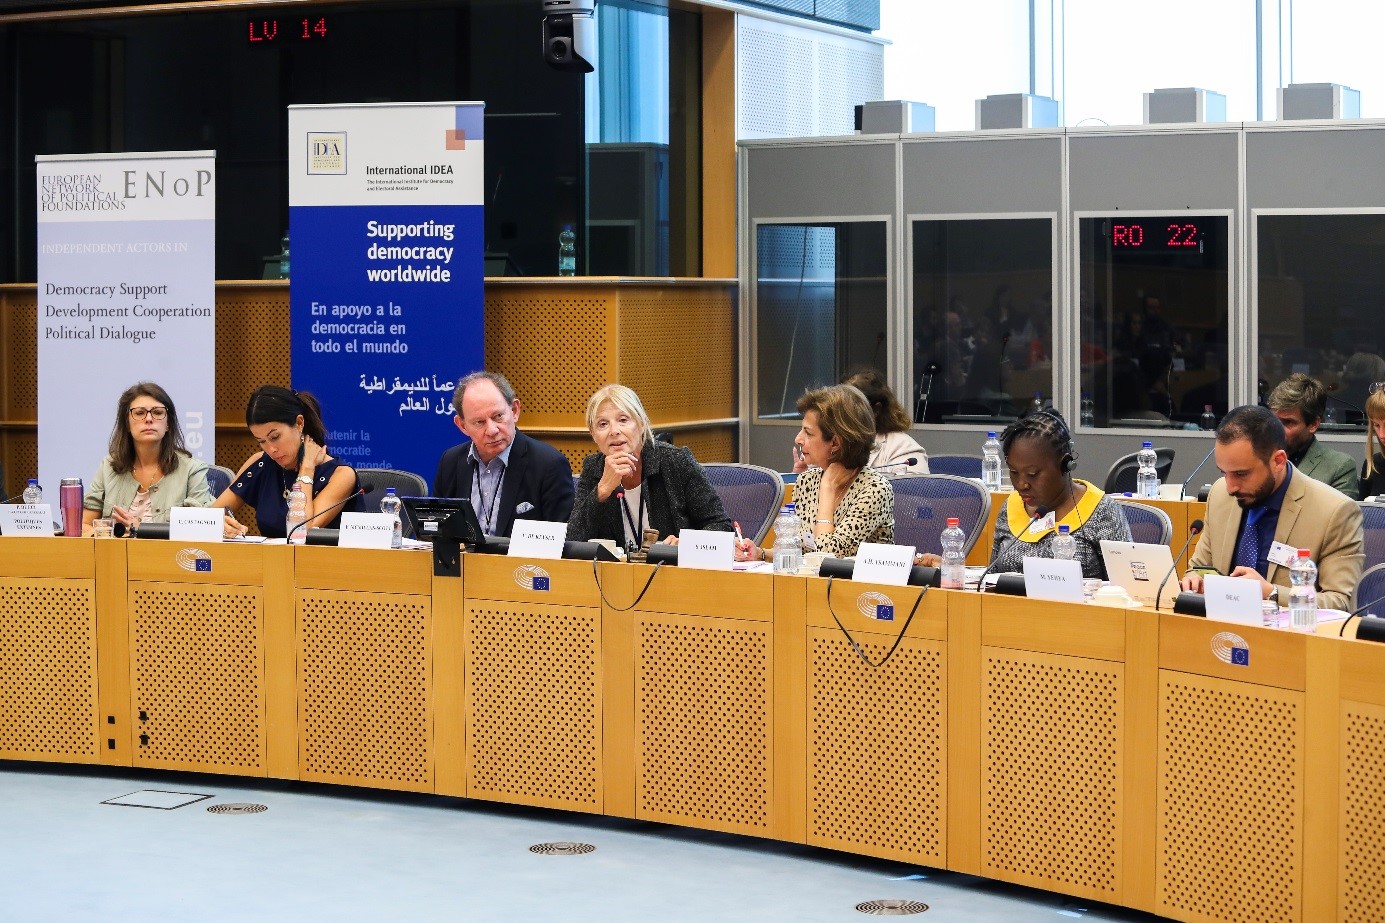 Photo: European Union From 3rd left, Edward McMillan-Scott, Véronique de Keyser, Shada Islam, Apolmida Haruna Tsammani and Mehdi Yehya